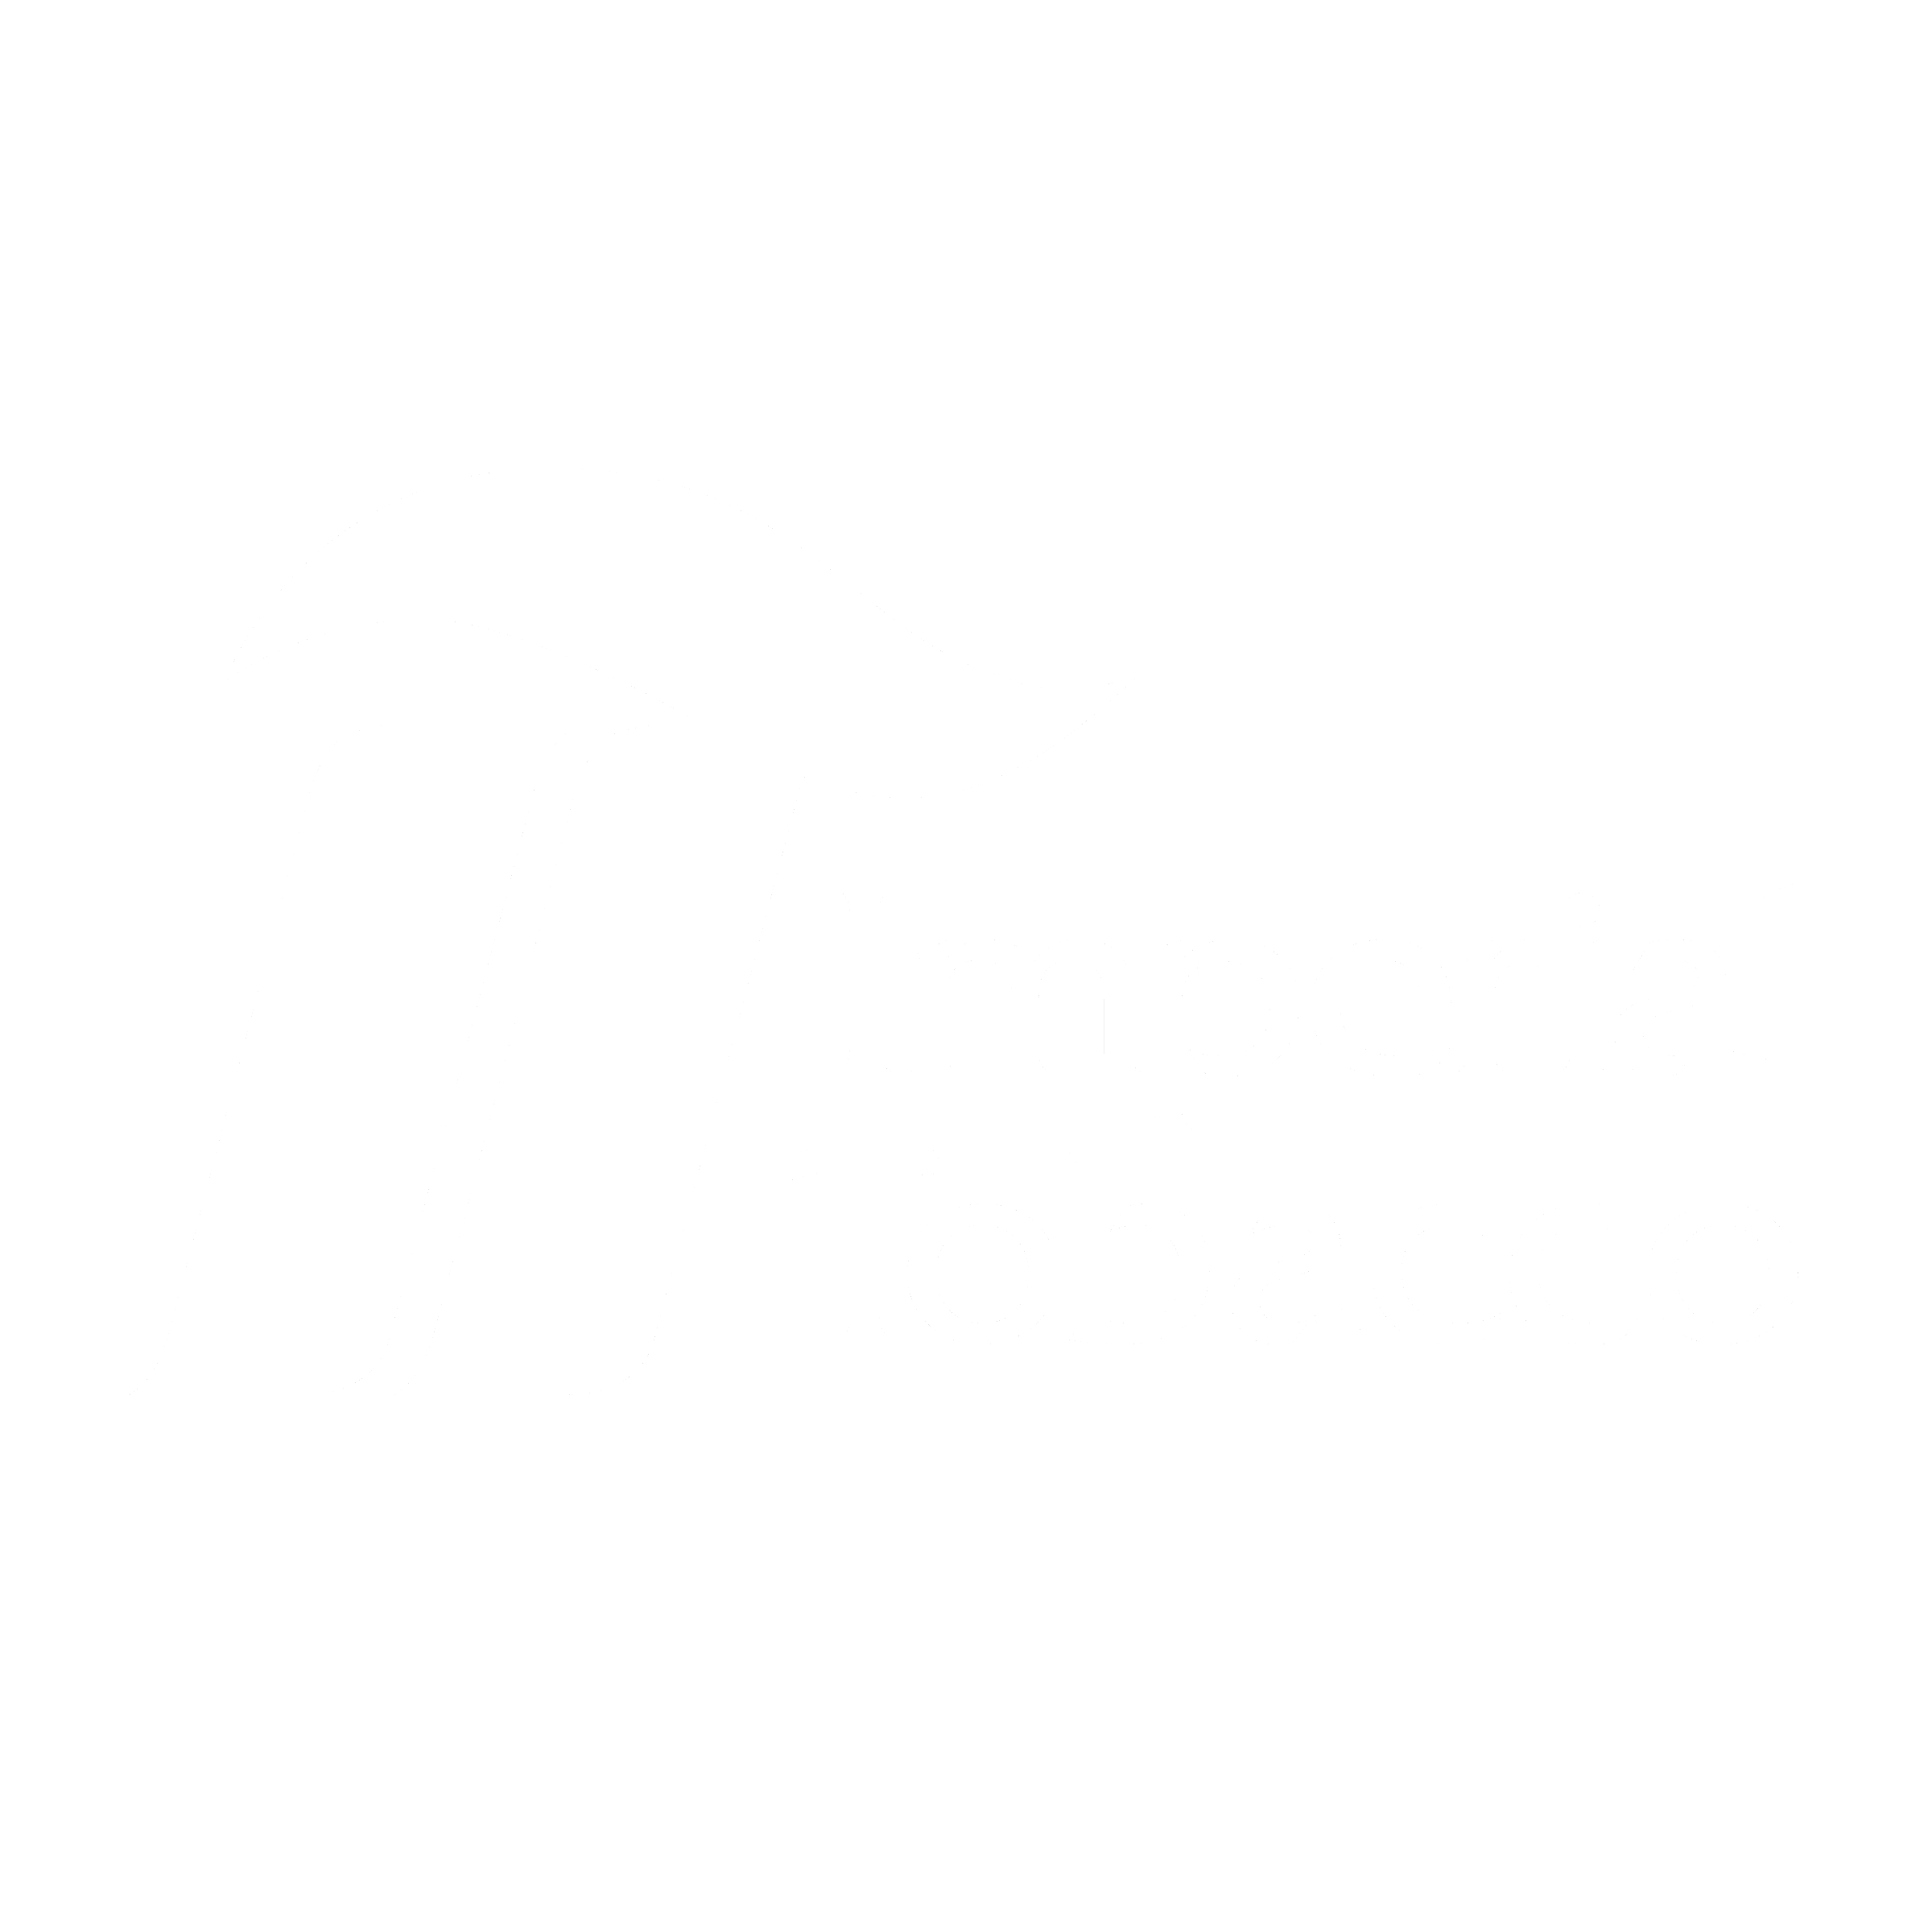 Imperial Tobacco Logo - Imperial Tobacco Logo PNG Transparent & SVG Vector